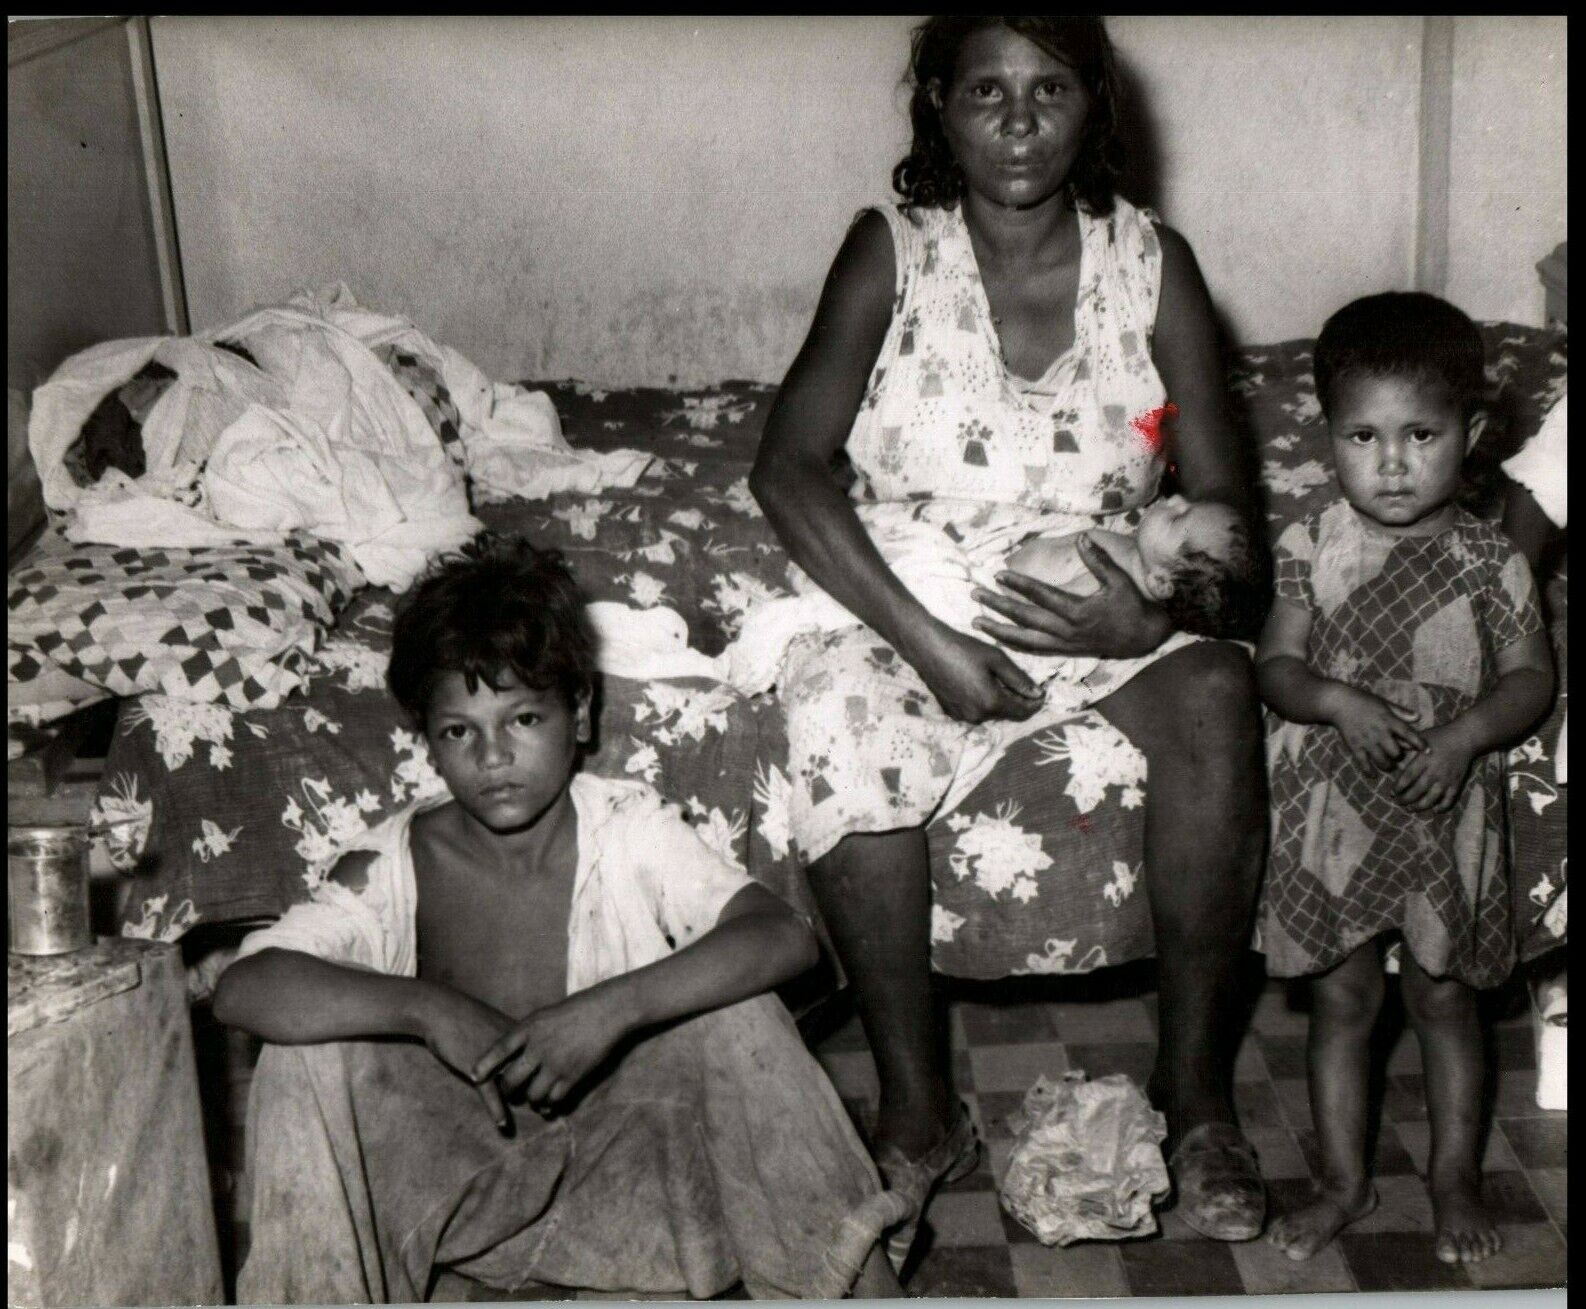 SOCIAL EXCLUSION PEASANT MOTHER & CHILDREN CUBAN BEGGARS CUBA 1950s Photo Y 171